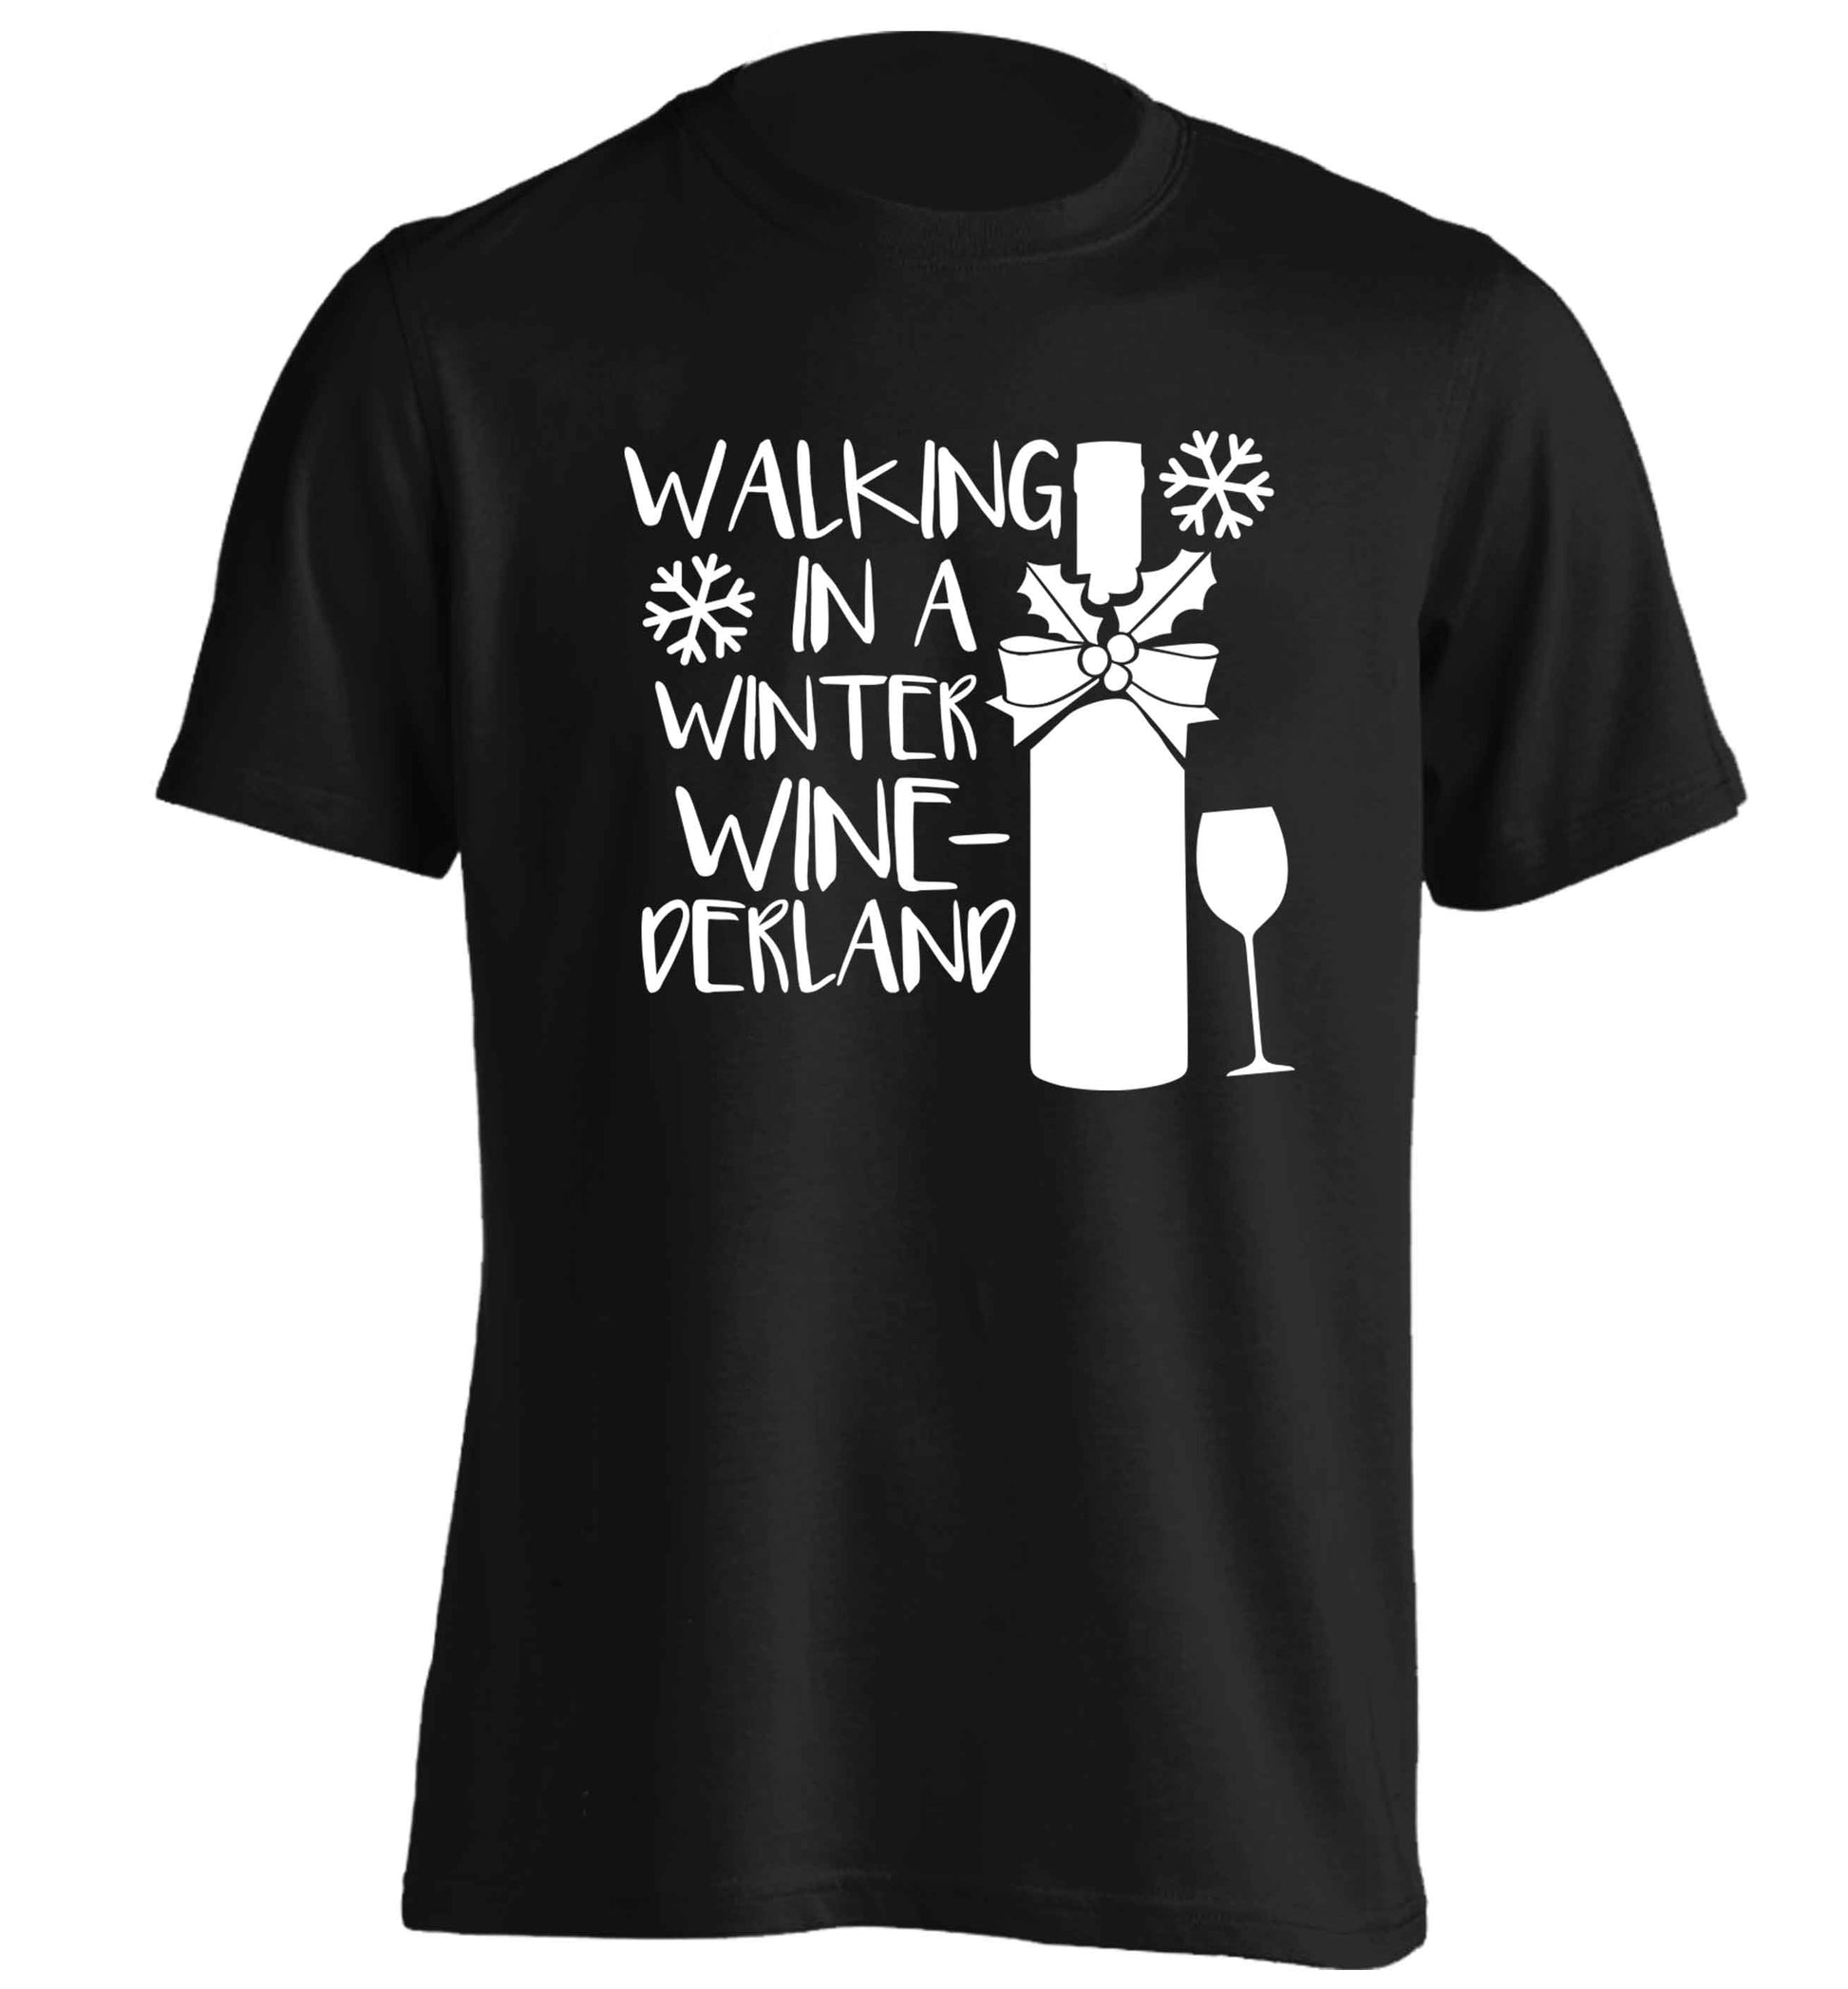 Walking in a wine-derwonderland adults unisex black Tshirt 2XL